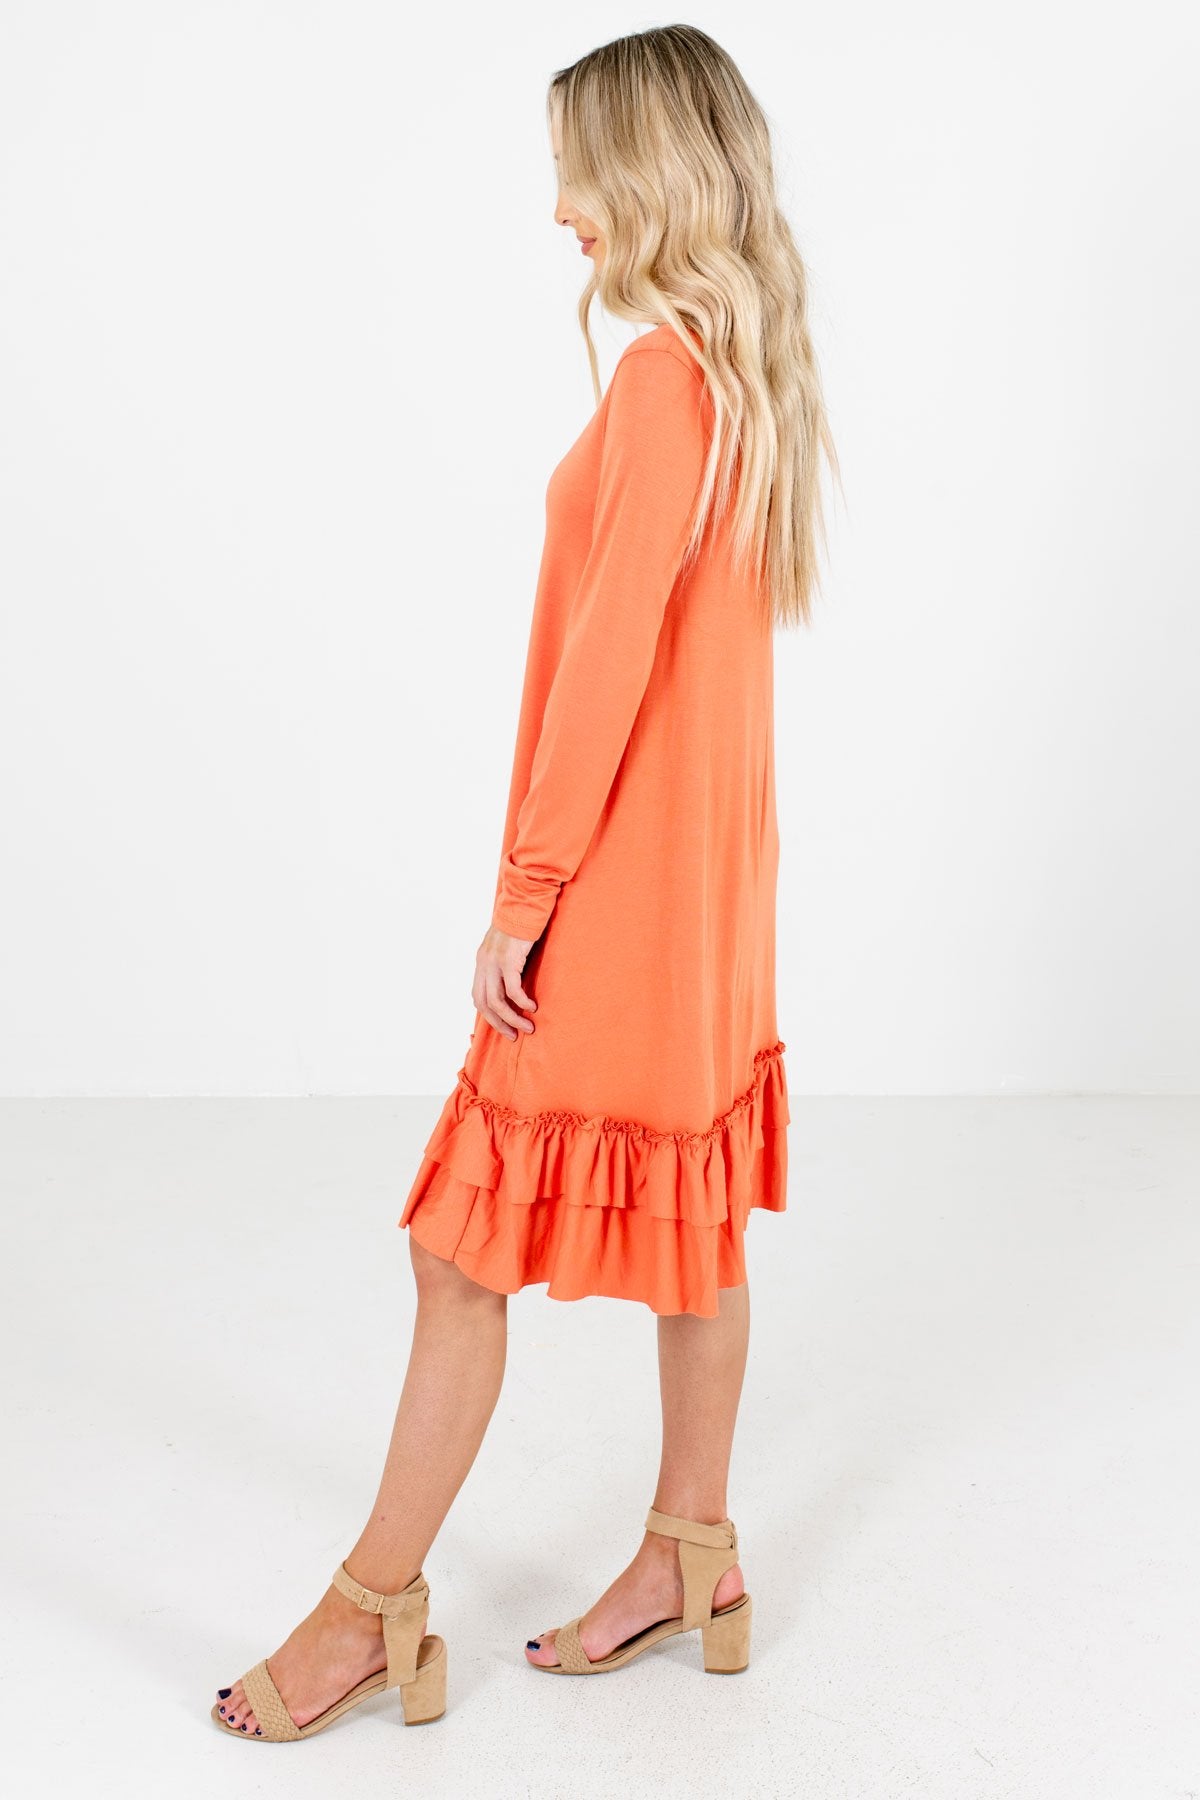 Orange Round Neckline Boutique Knee-Length Dresses for Women